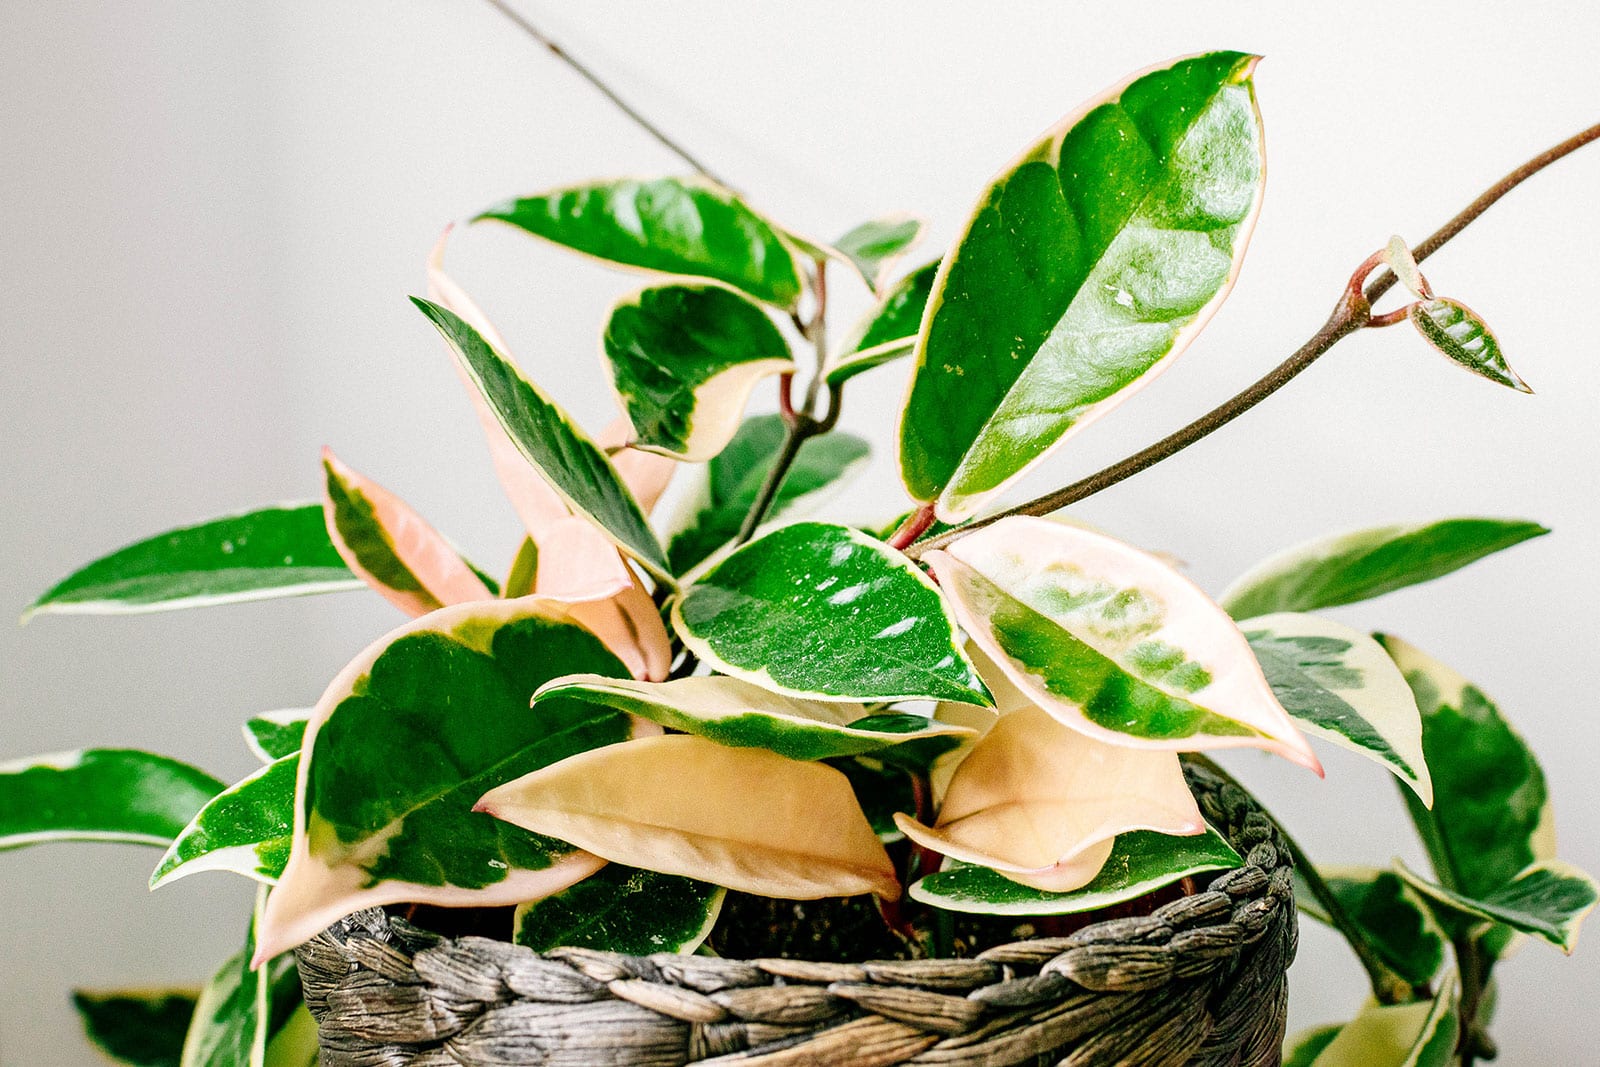 Hoya carnosa 'Krimson Queen' tricolor wax plant in a wicker basket